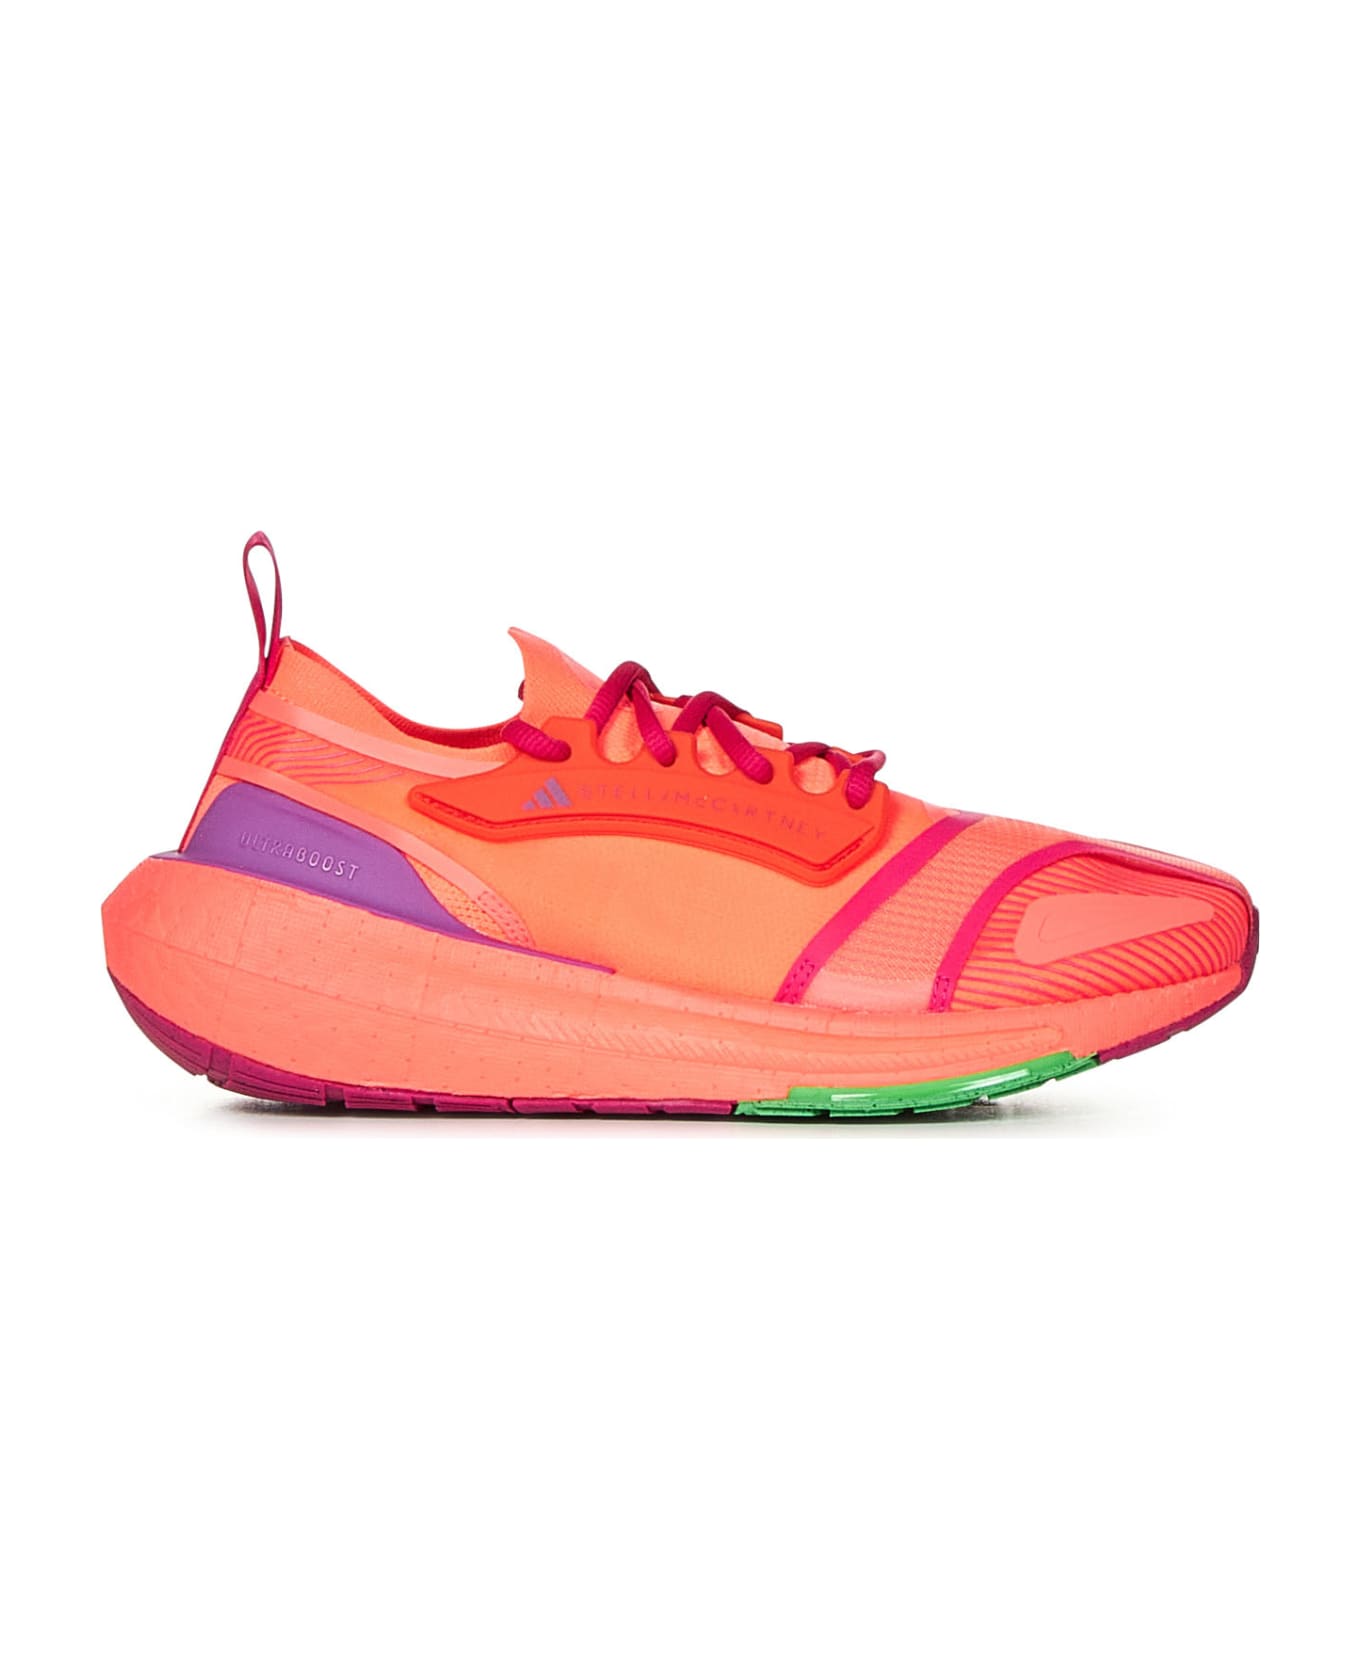 Adidas by Stella McCartney Ultraboost Light Sneakers - Orange スニーカー